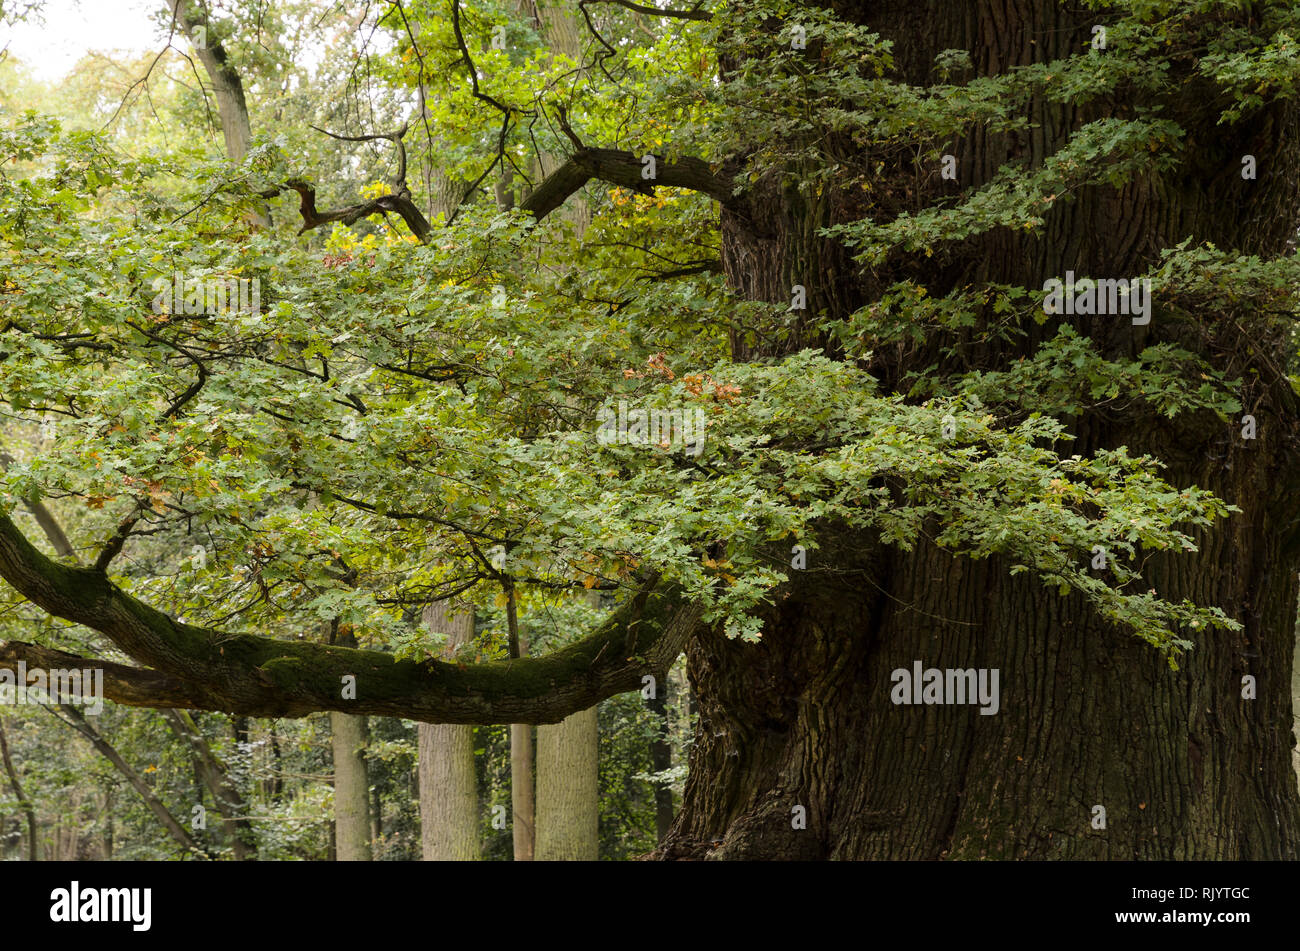 Oaktrees at Ivenack 'Ivenacker Eichen' Mecklenburg-Pomerania, Germany Stock Photo